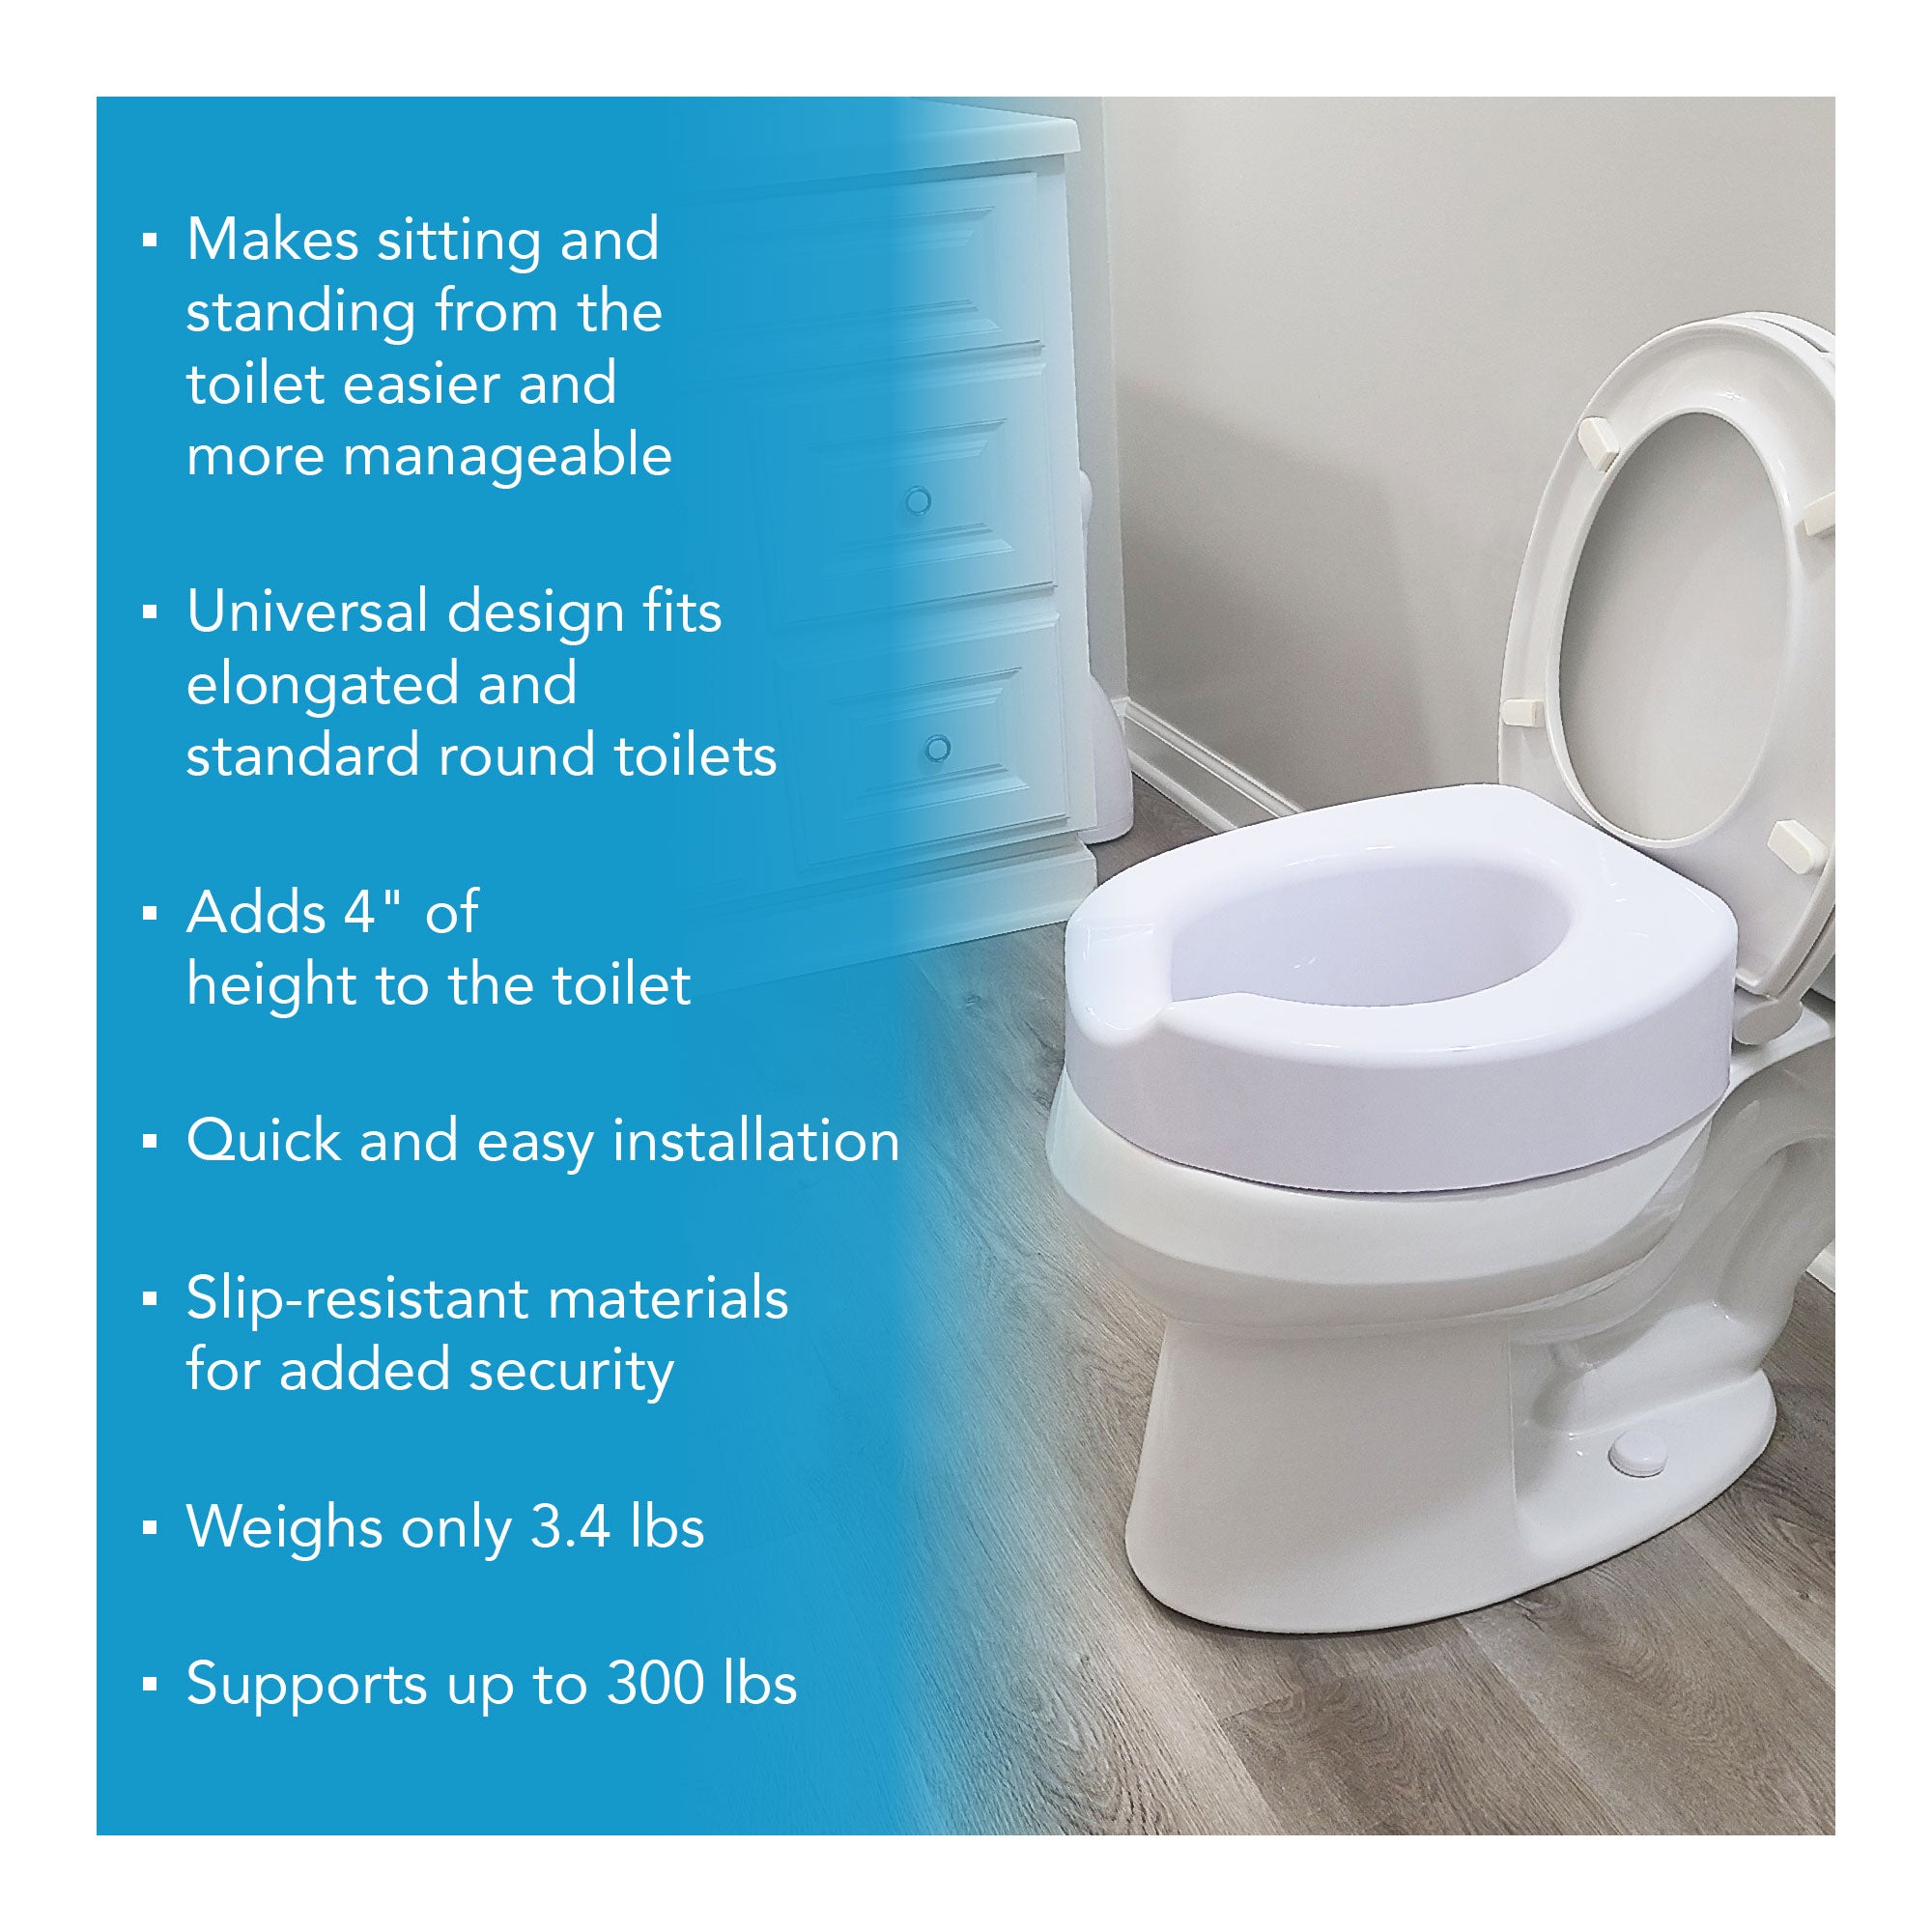 A white raised toilet seat on a toilet with descriptive text